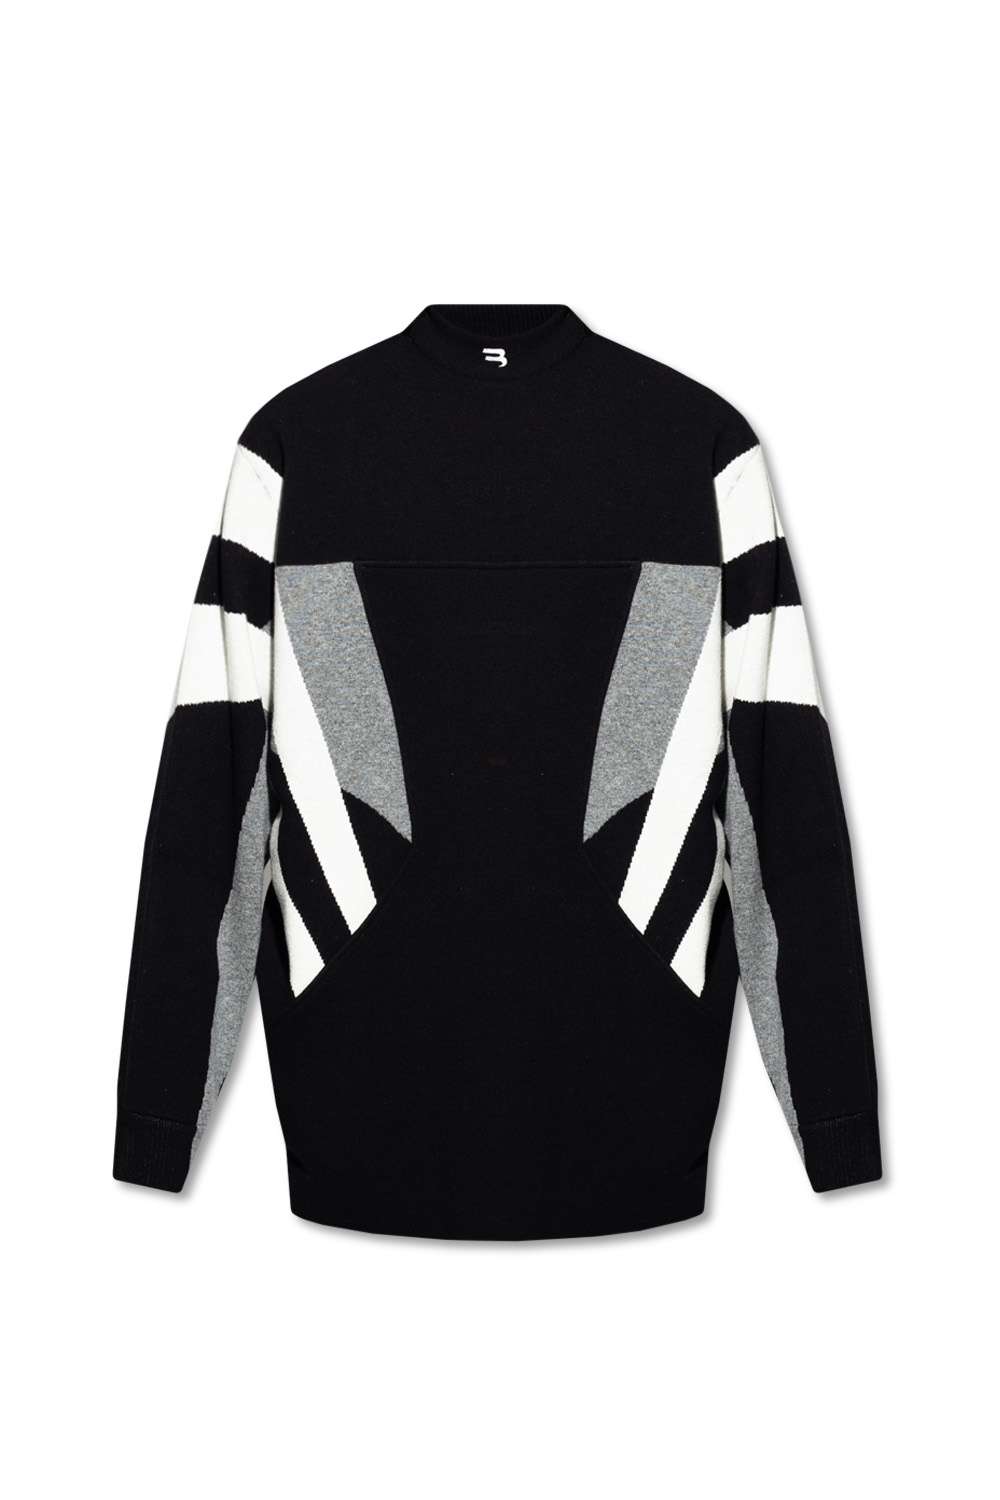 KENZO K-Tiger Intarsia Jumper - Clothing from Circle Fashion UK